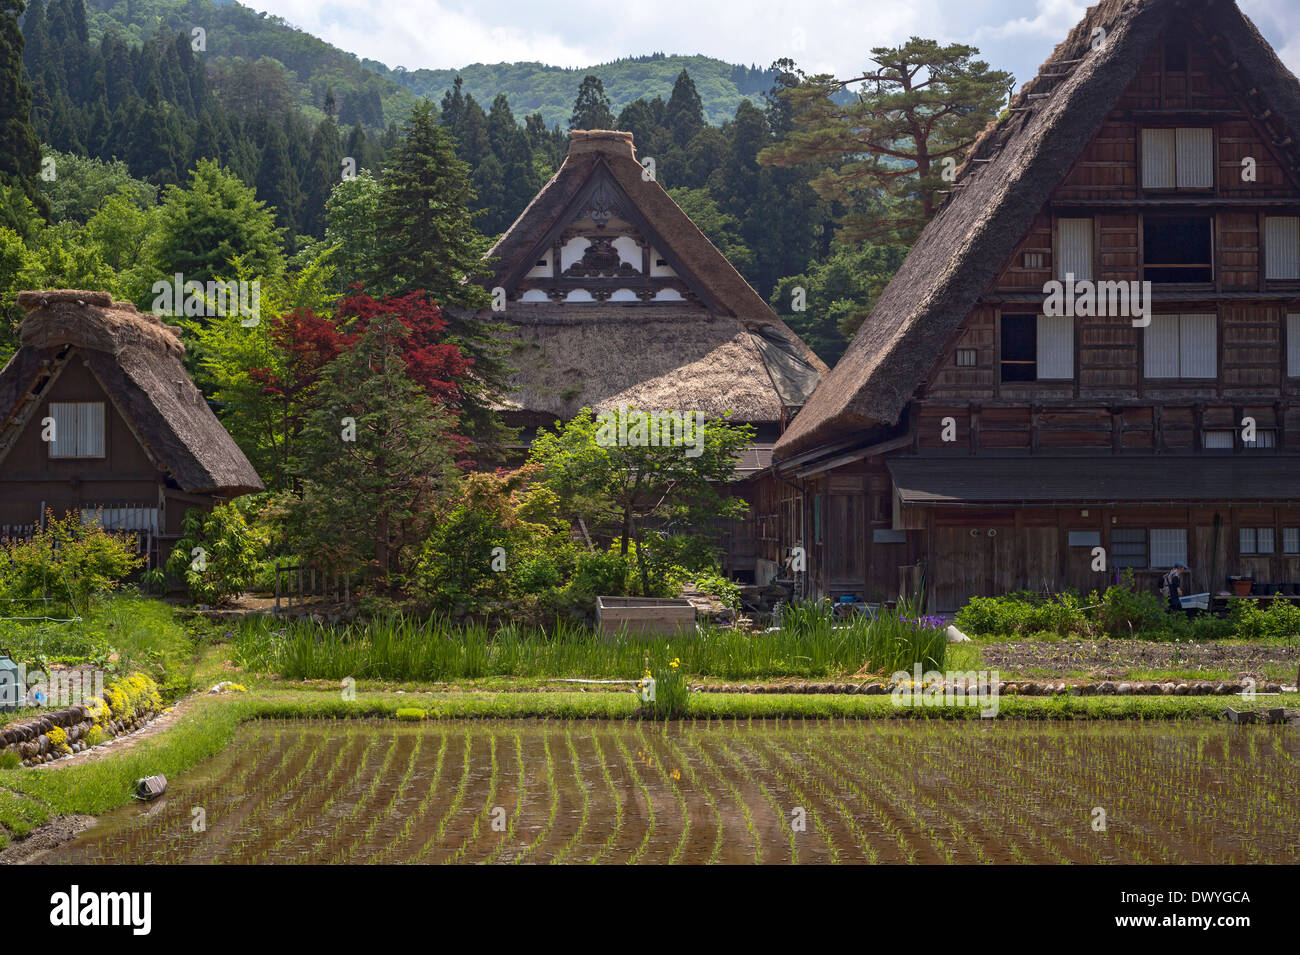 Gassho-style House with Steep Rafter Roof, Shirakawa, Gifu Prefecture, Japan Stock Photo